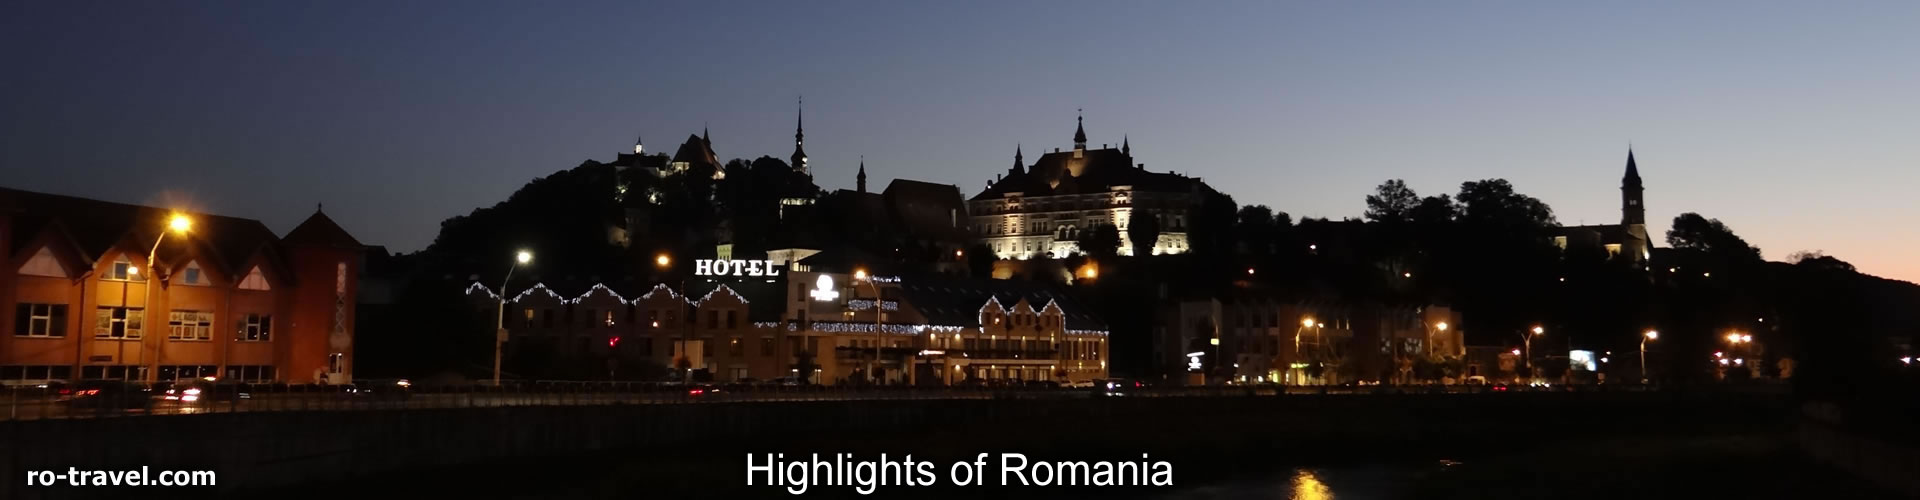 Highlights of Romania